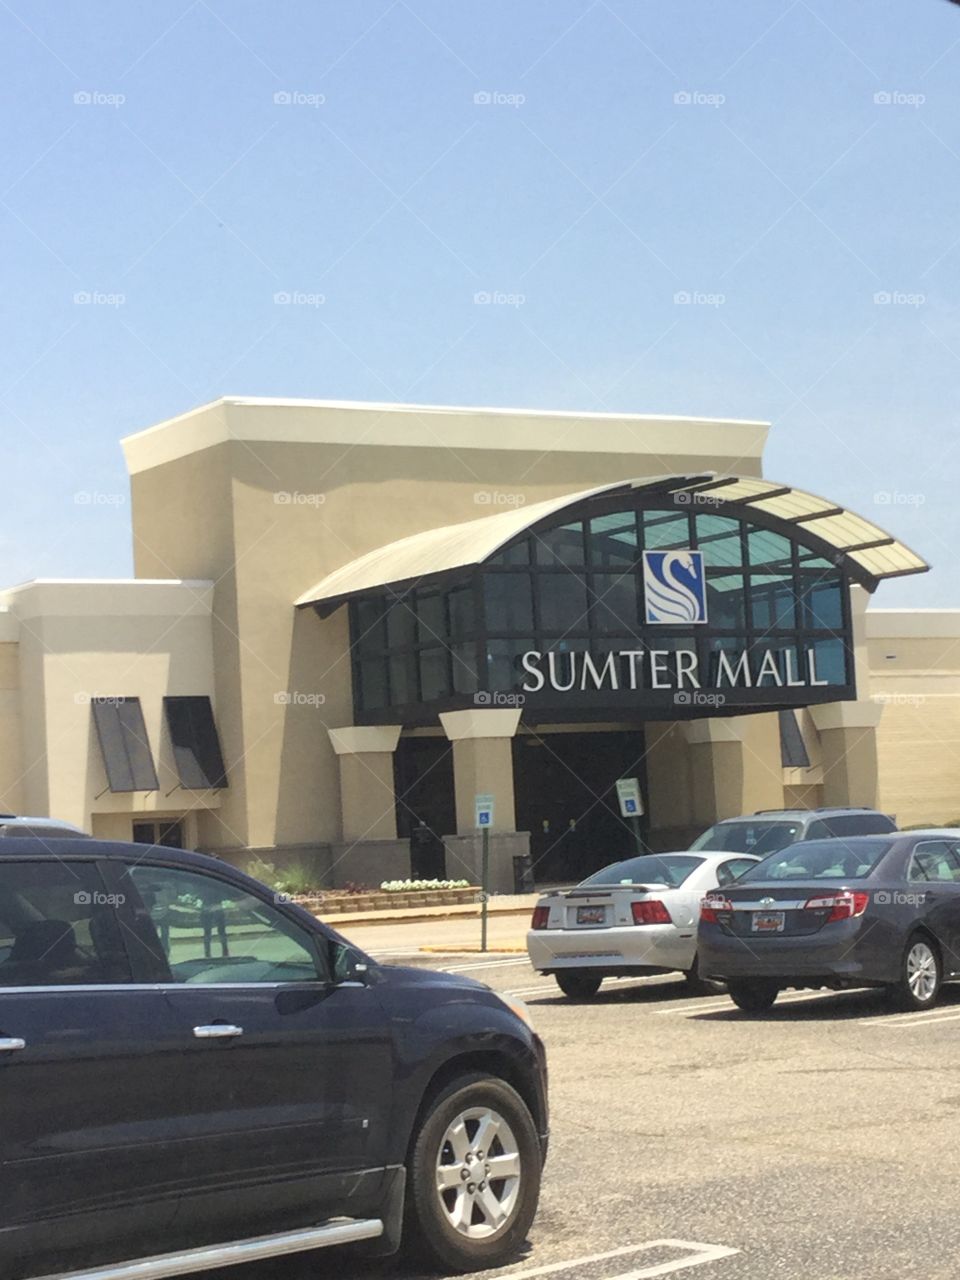 Sumter mall 